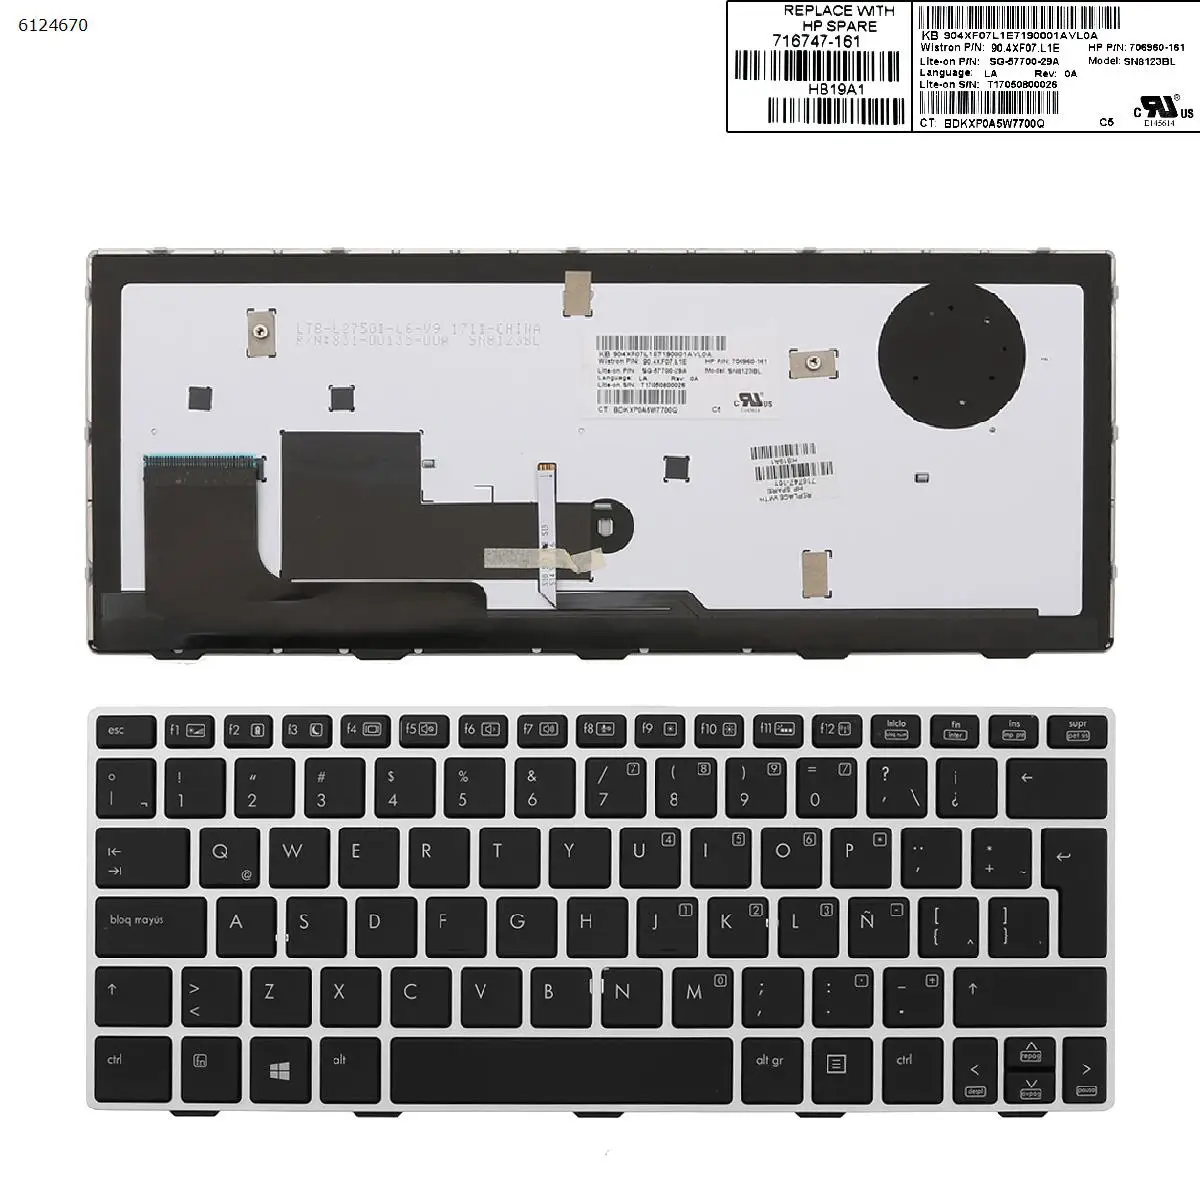 

Laptop Silver Frame Backlit New Replacement Keyboard for HP EliteBook Revolve 810 G1 810 G2 810 G3 LA Latin Spanish Layout